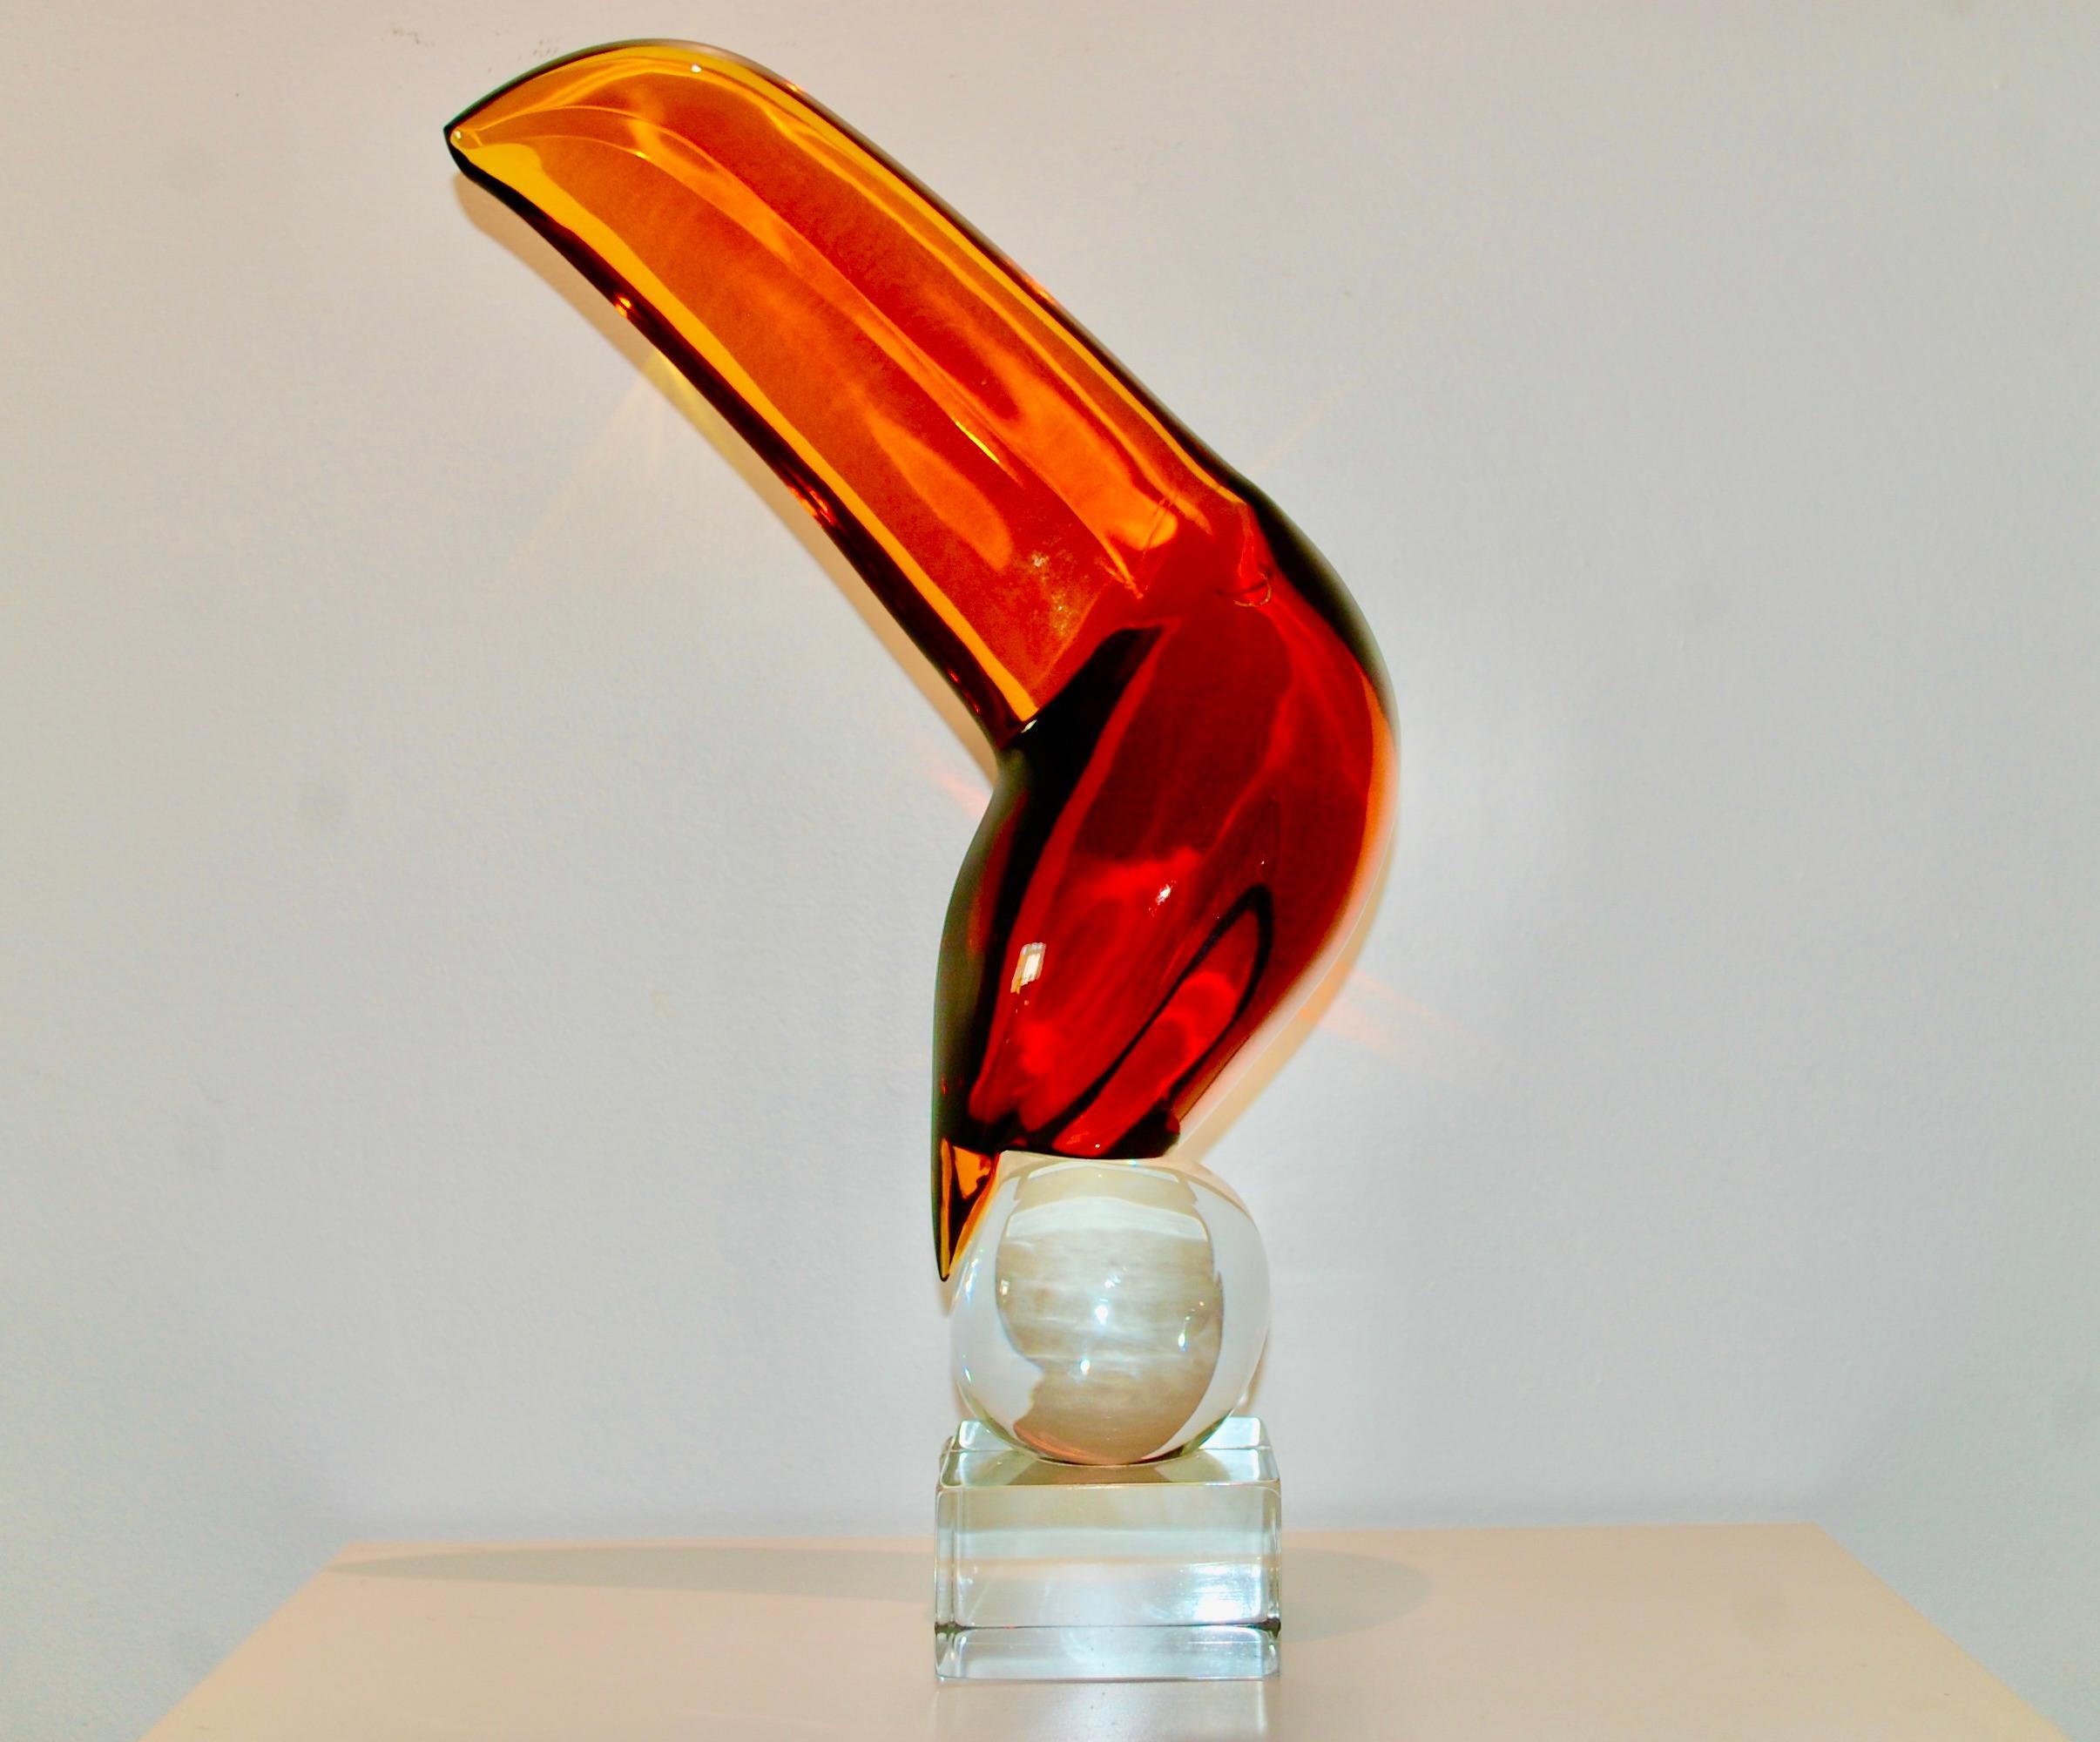 Toucan Large Murano Glass  Sculptures
Handblown glass measuring 19